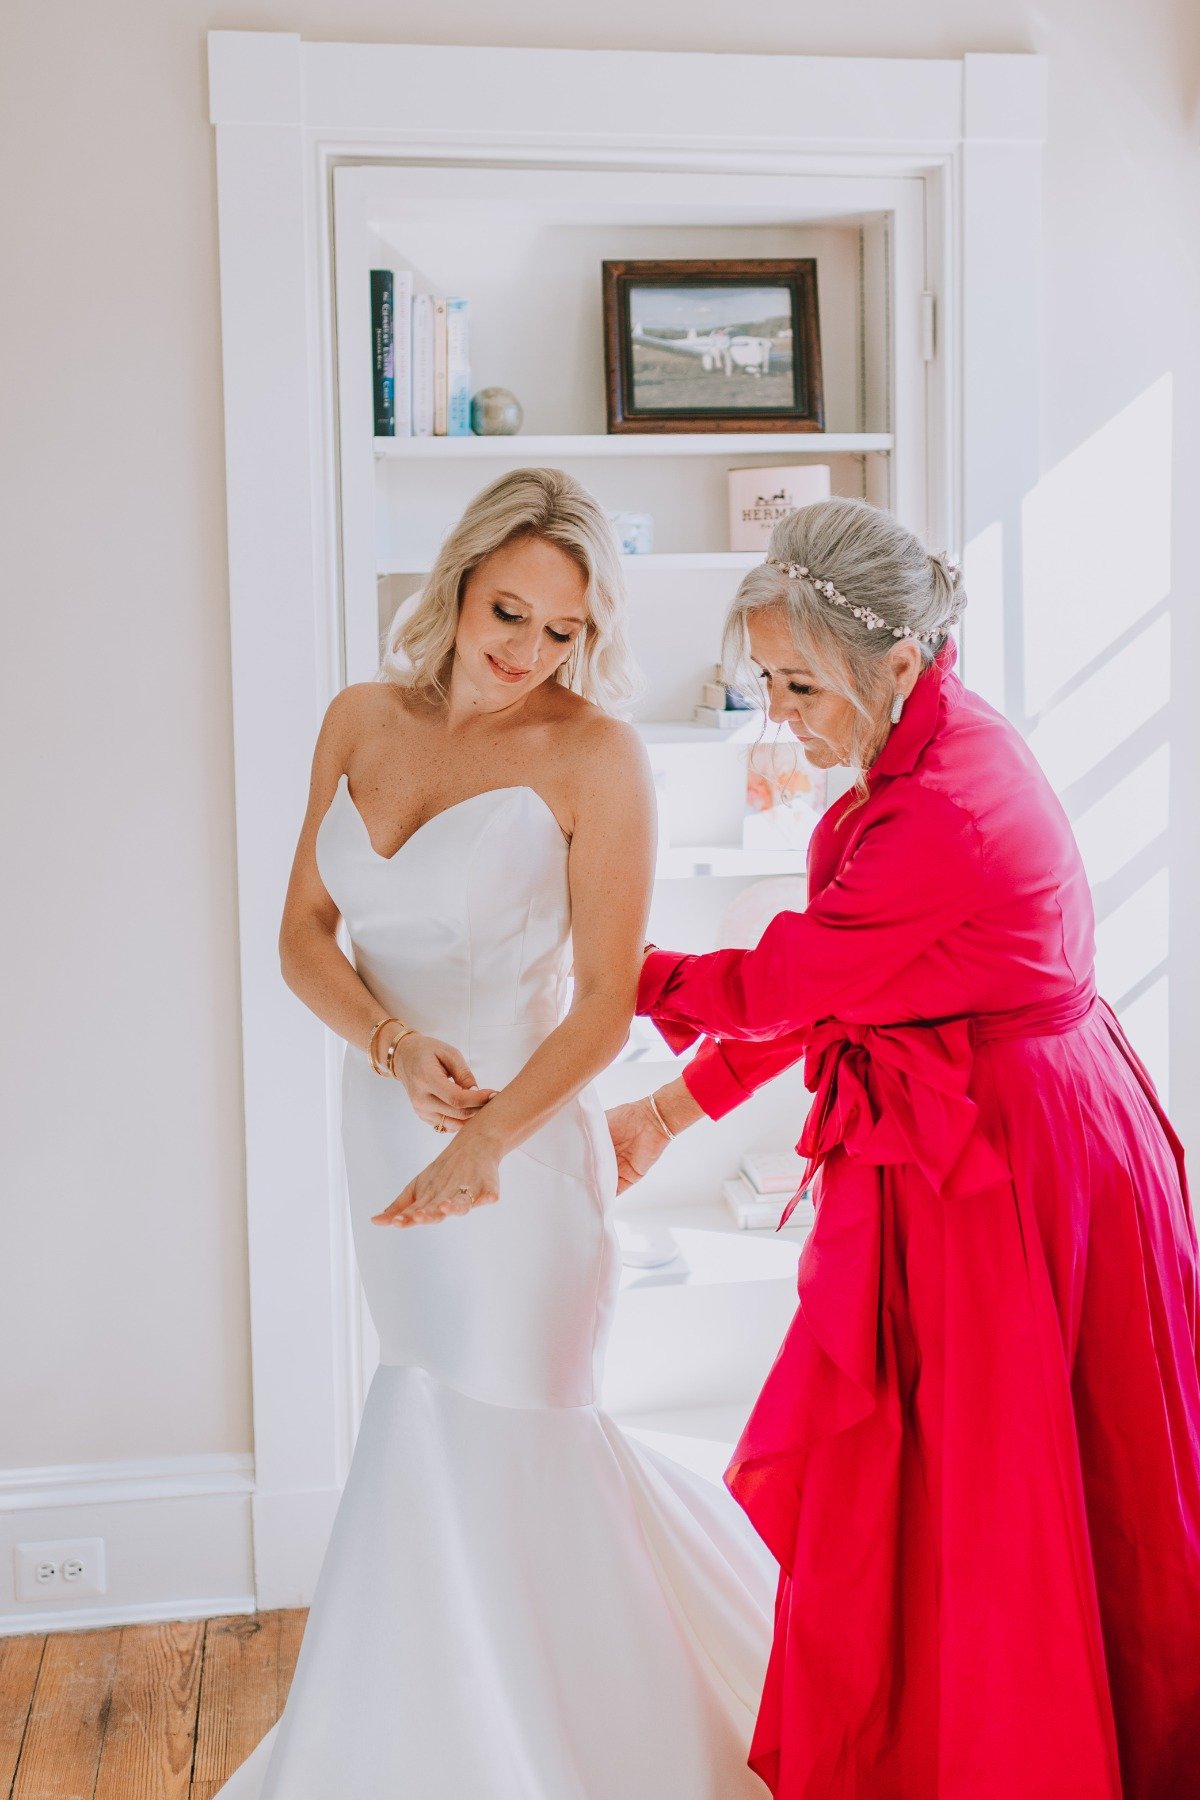 Mom helping bride into dress